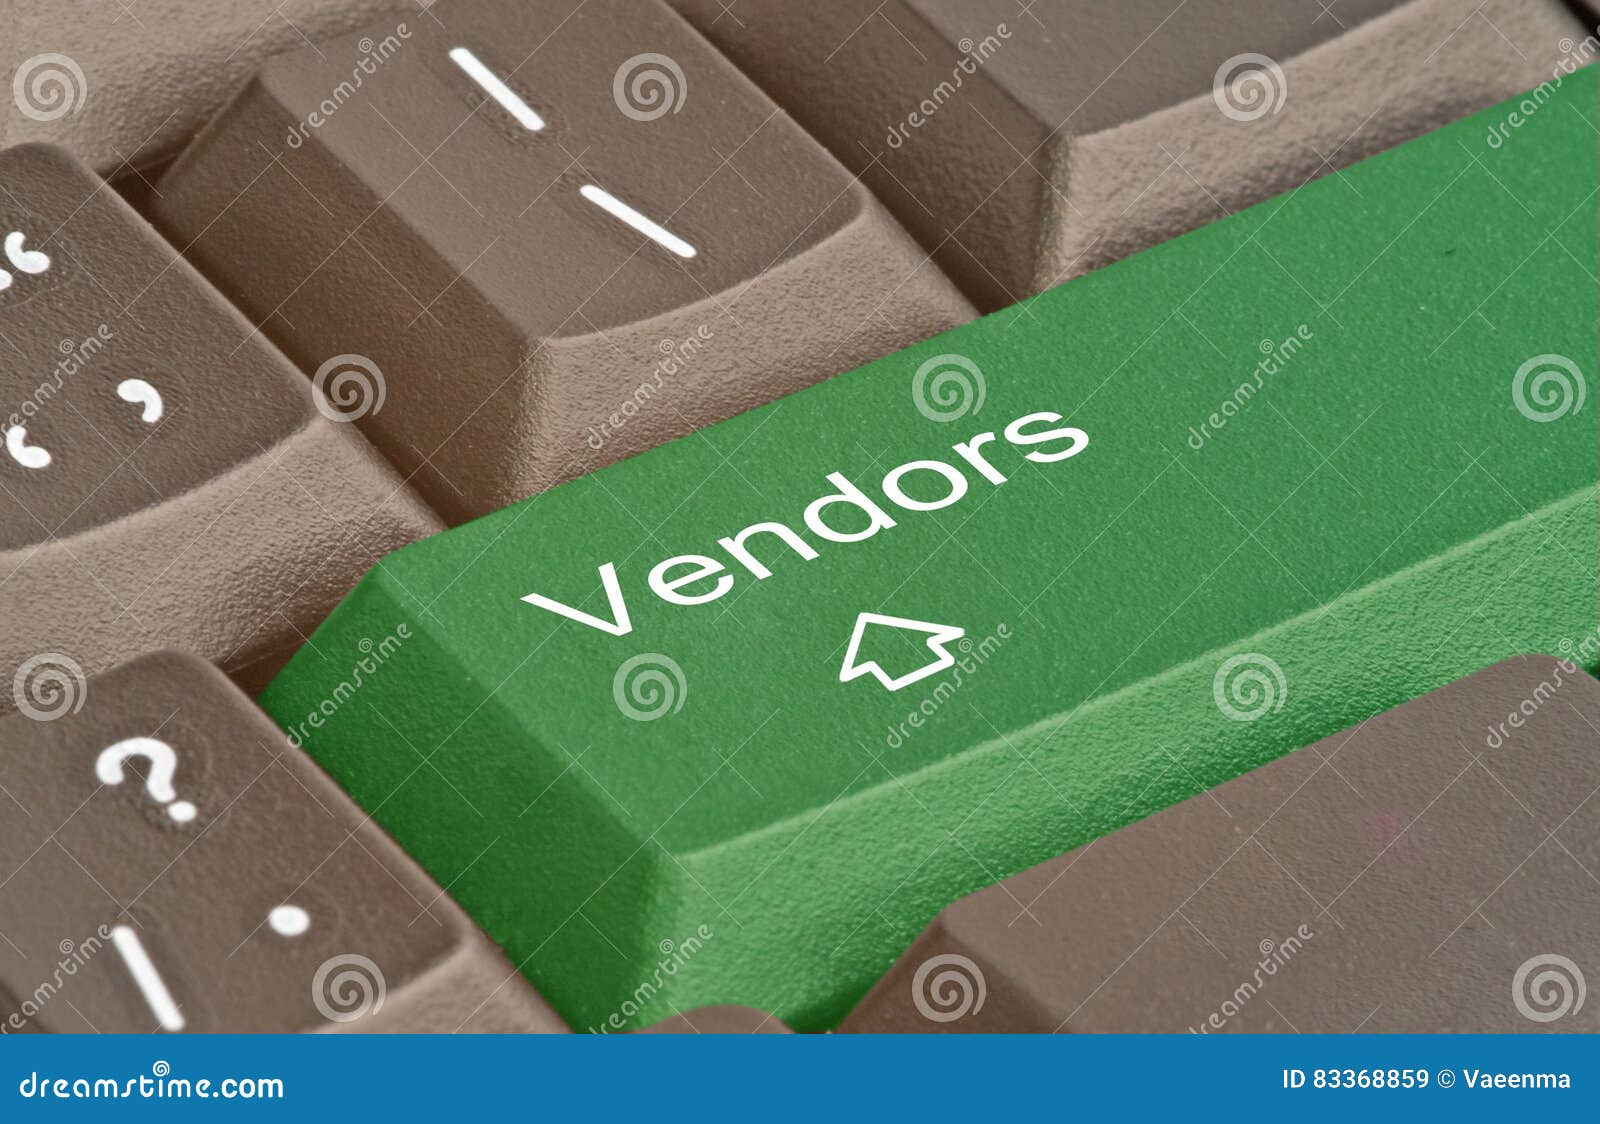 key for vendors